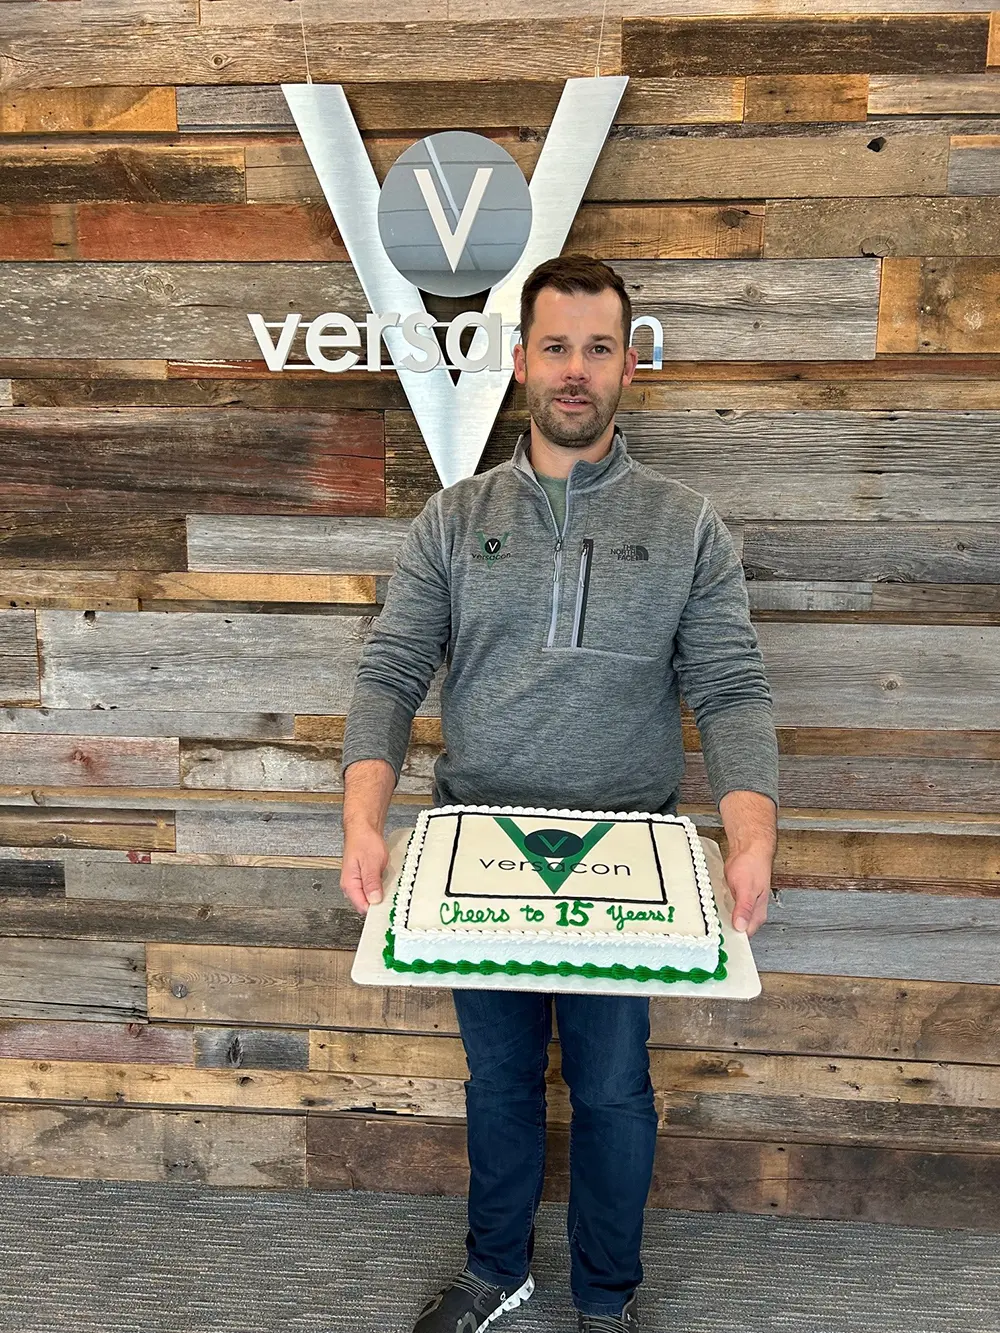 Chuck with a 15 year Versacon cake